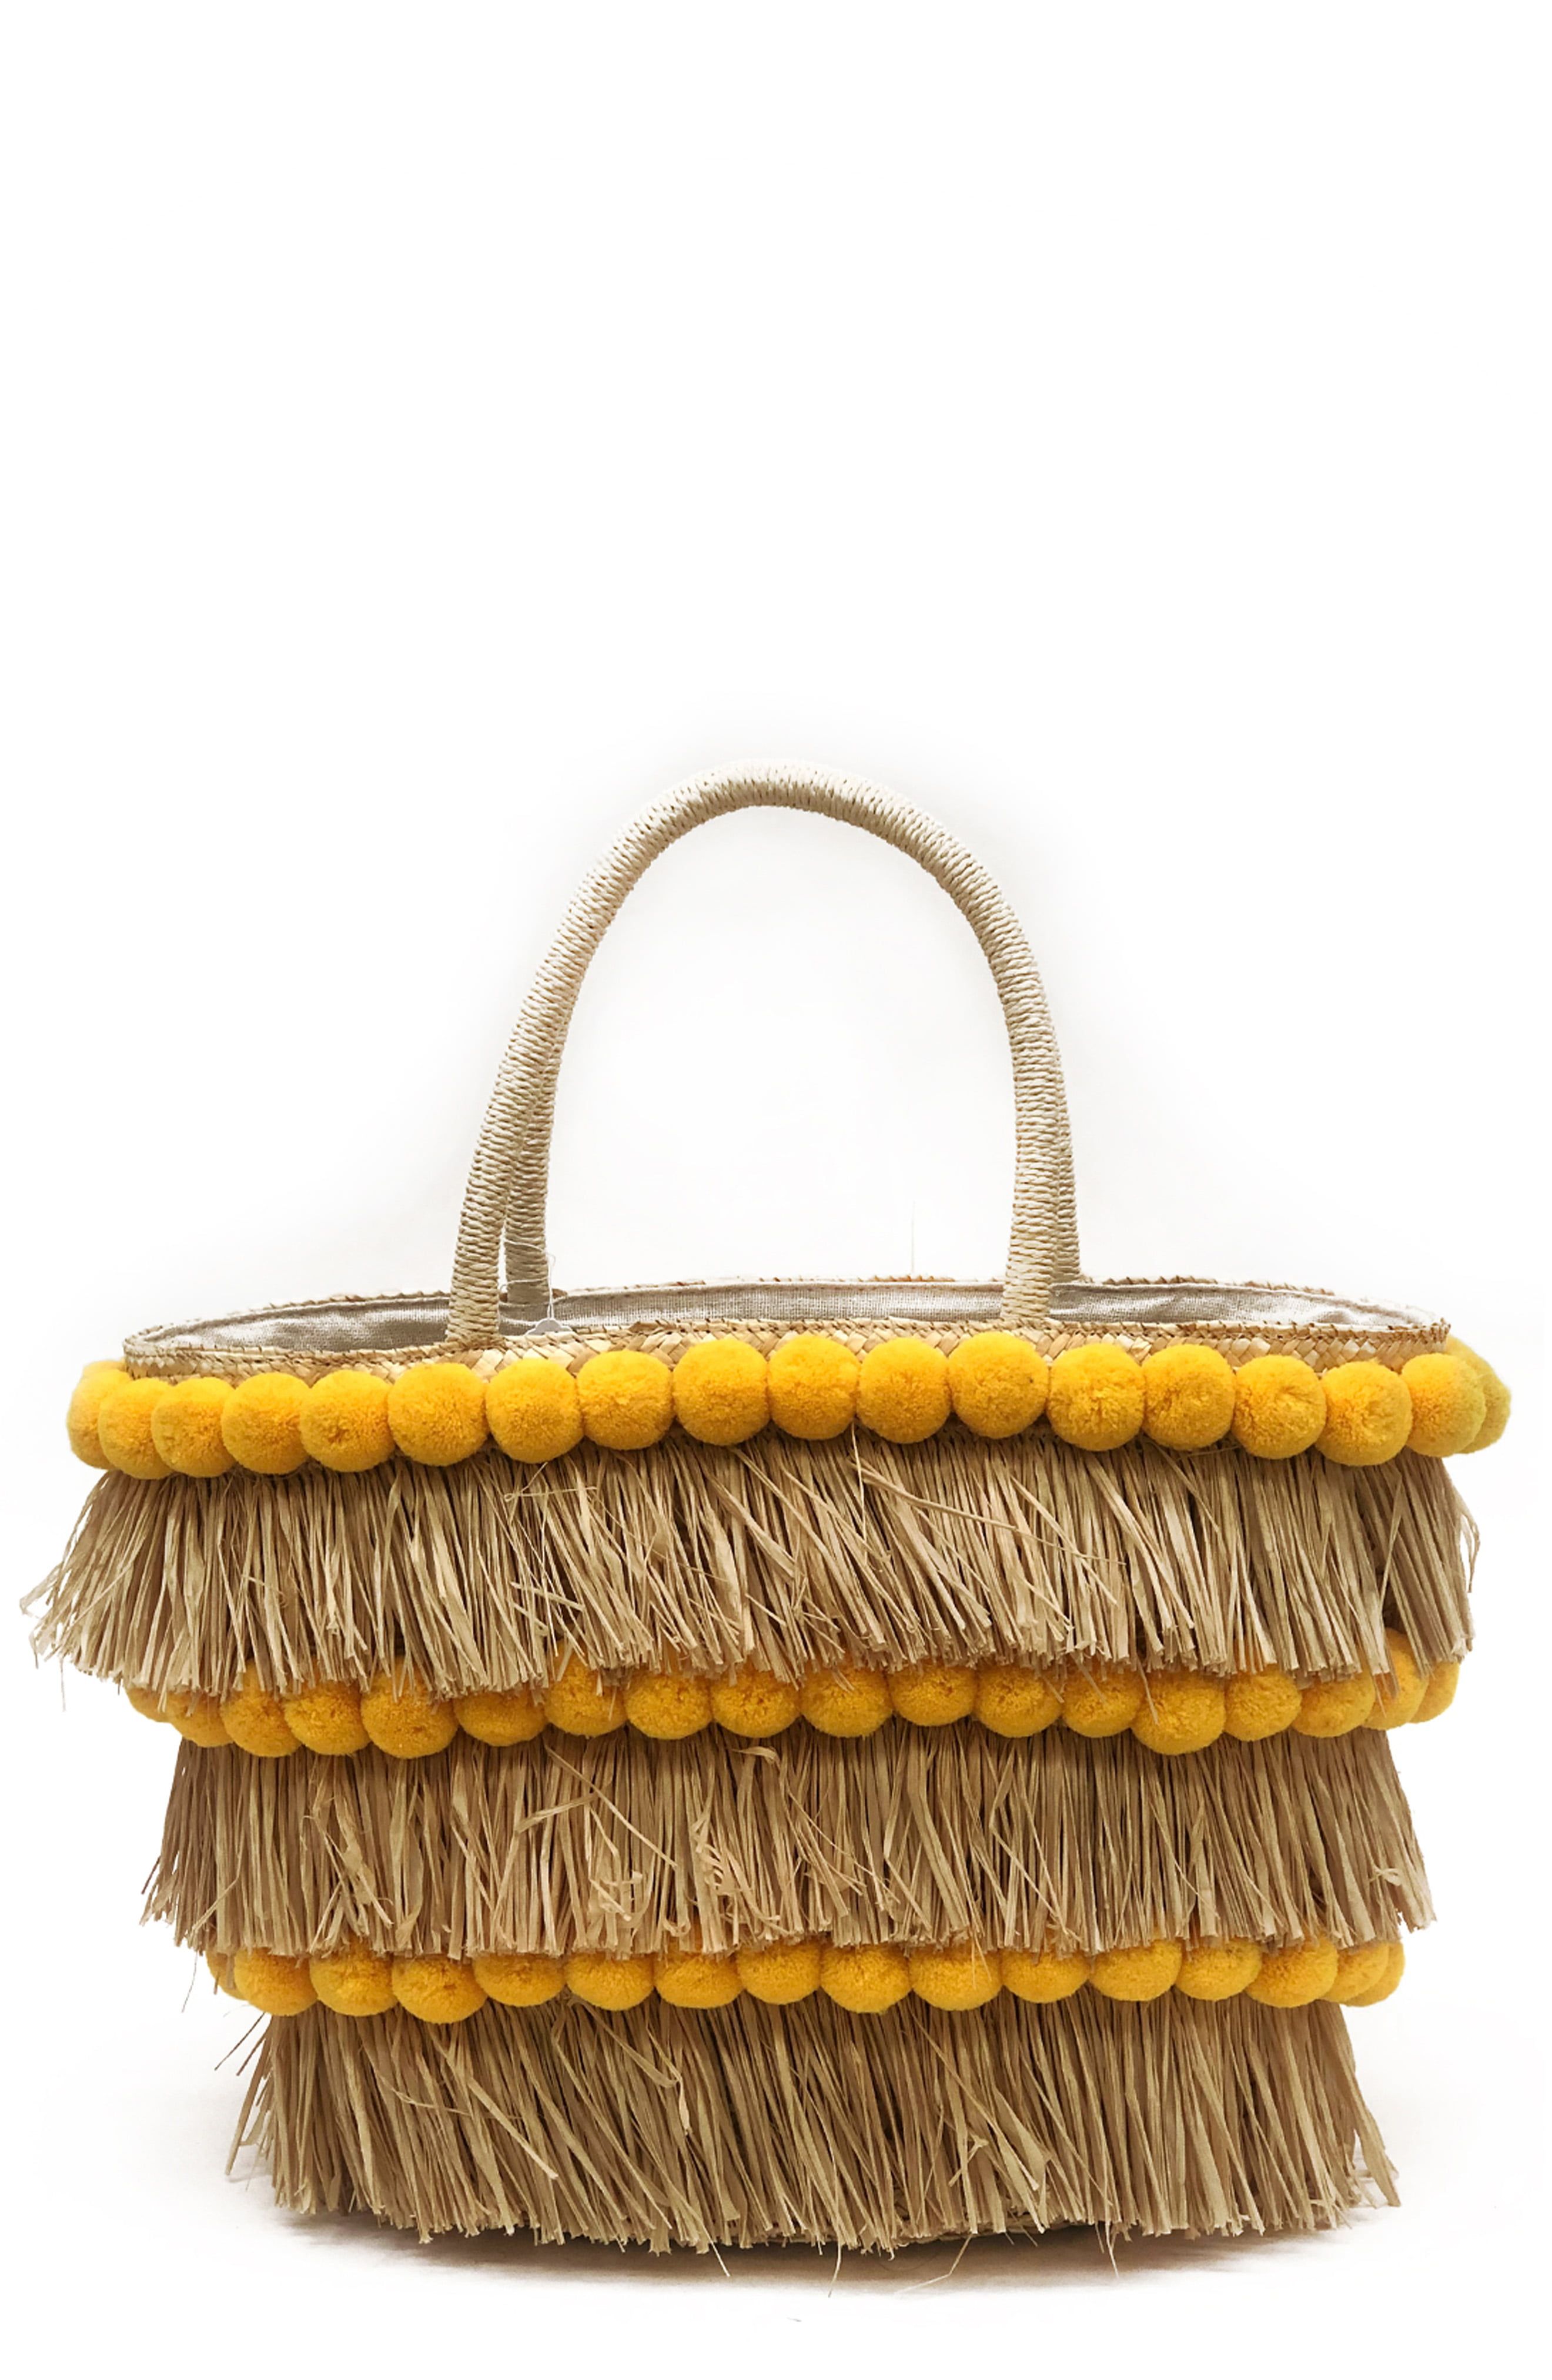 Bag tobed; beach bag; basket; cabas; beach toss; handbag; race toss